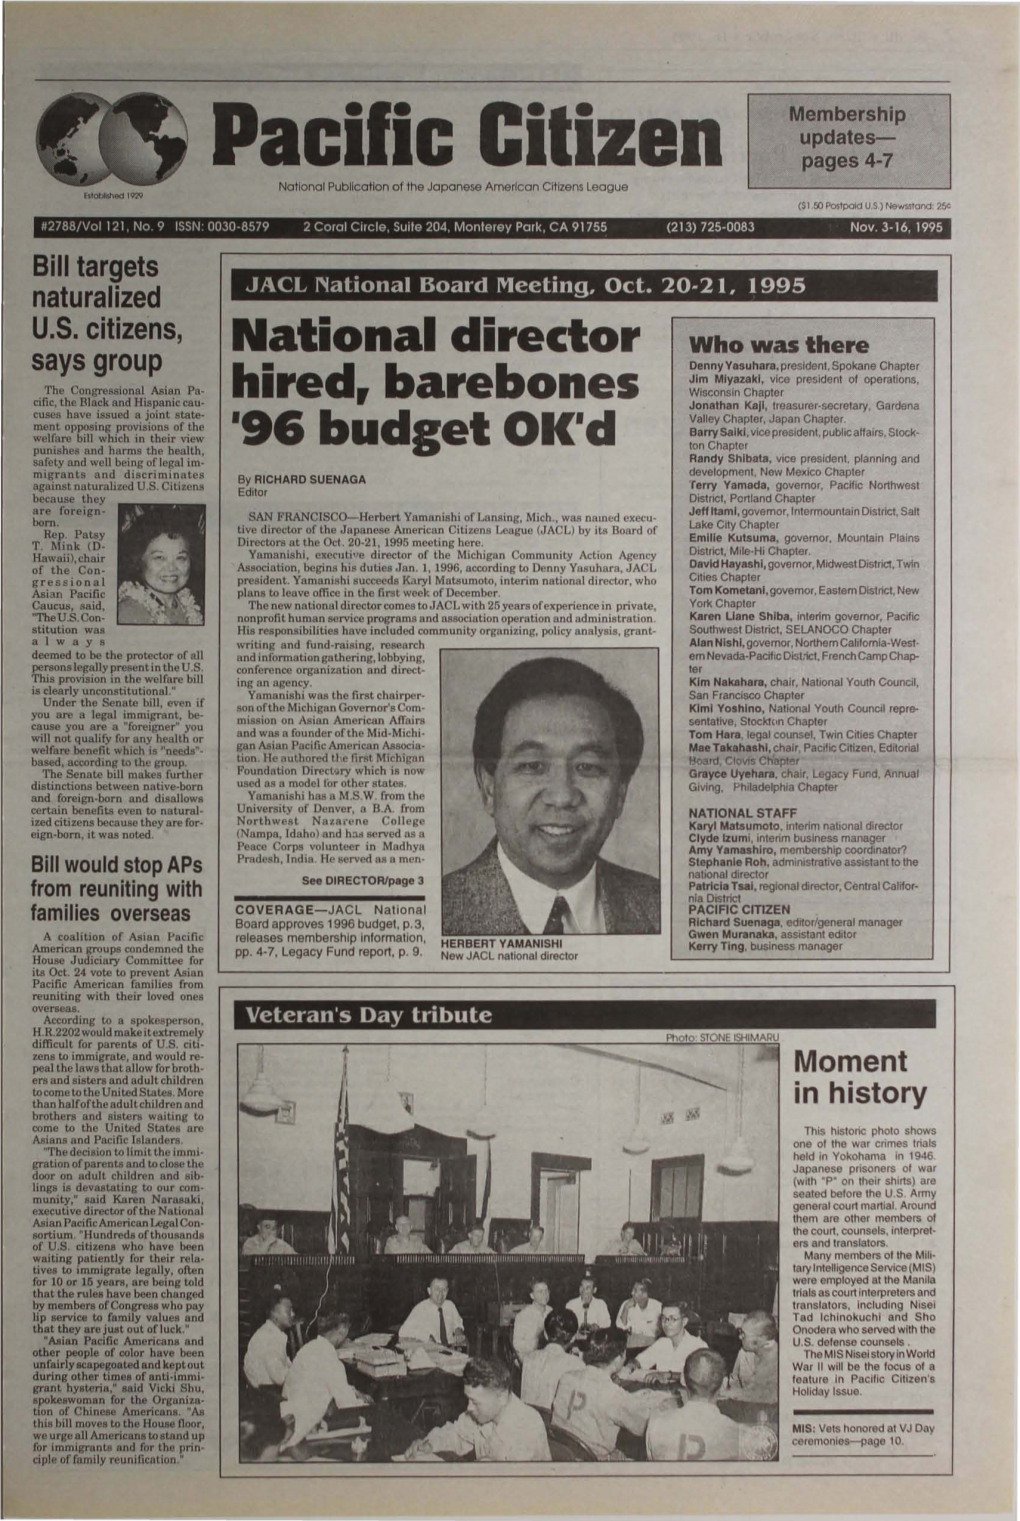 National Director Hired, Barebones 196 Budget Okld